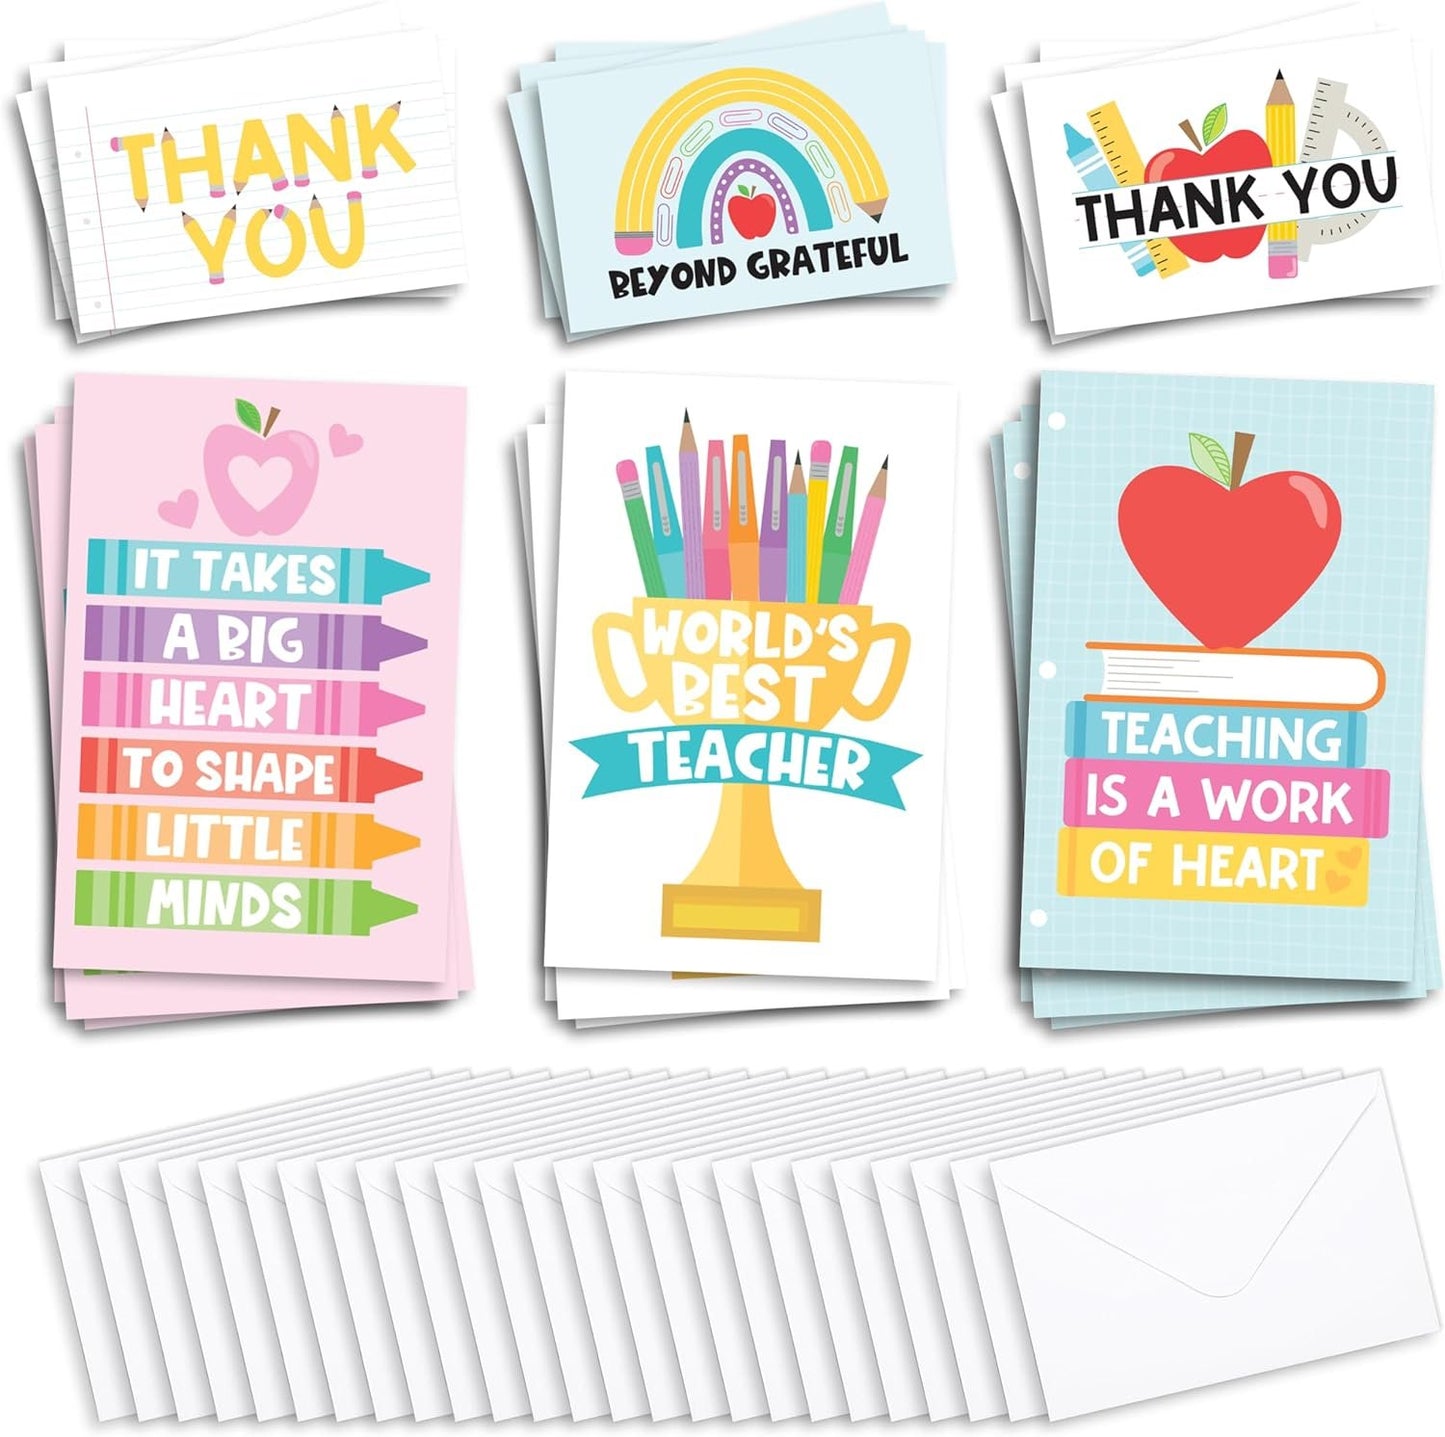 24 Colorful Teacher Thank You Cards From Student - Teacher Gift Card Teacher Appreciation Cards Bulk, Thank You Teacher Cards From Student, Bulk Thank You Cards For Teachers Appreciation Cards